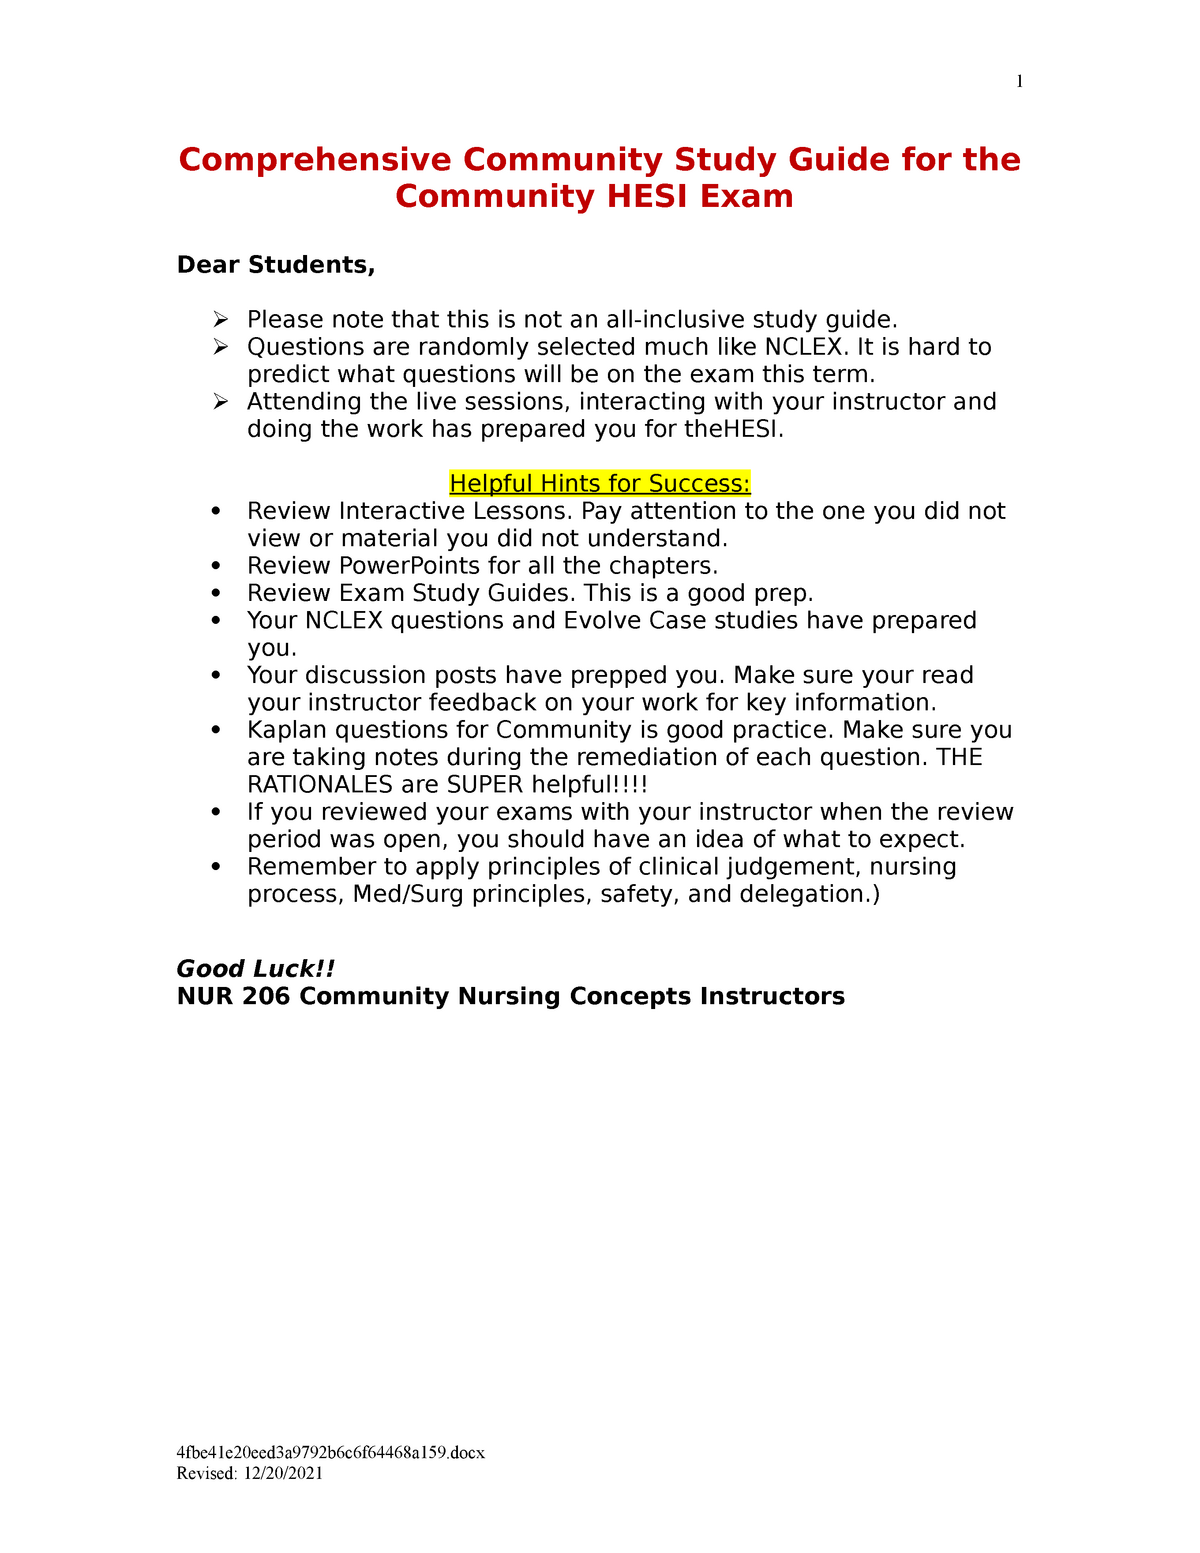 HESI Study Guide2021 Comprehensive Community Study